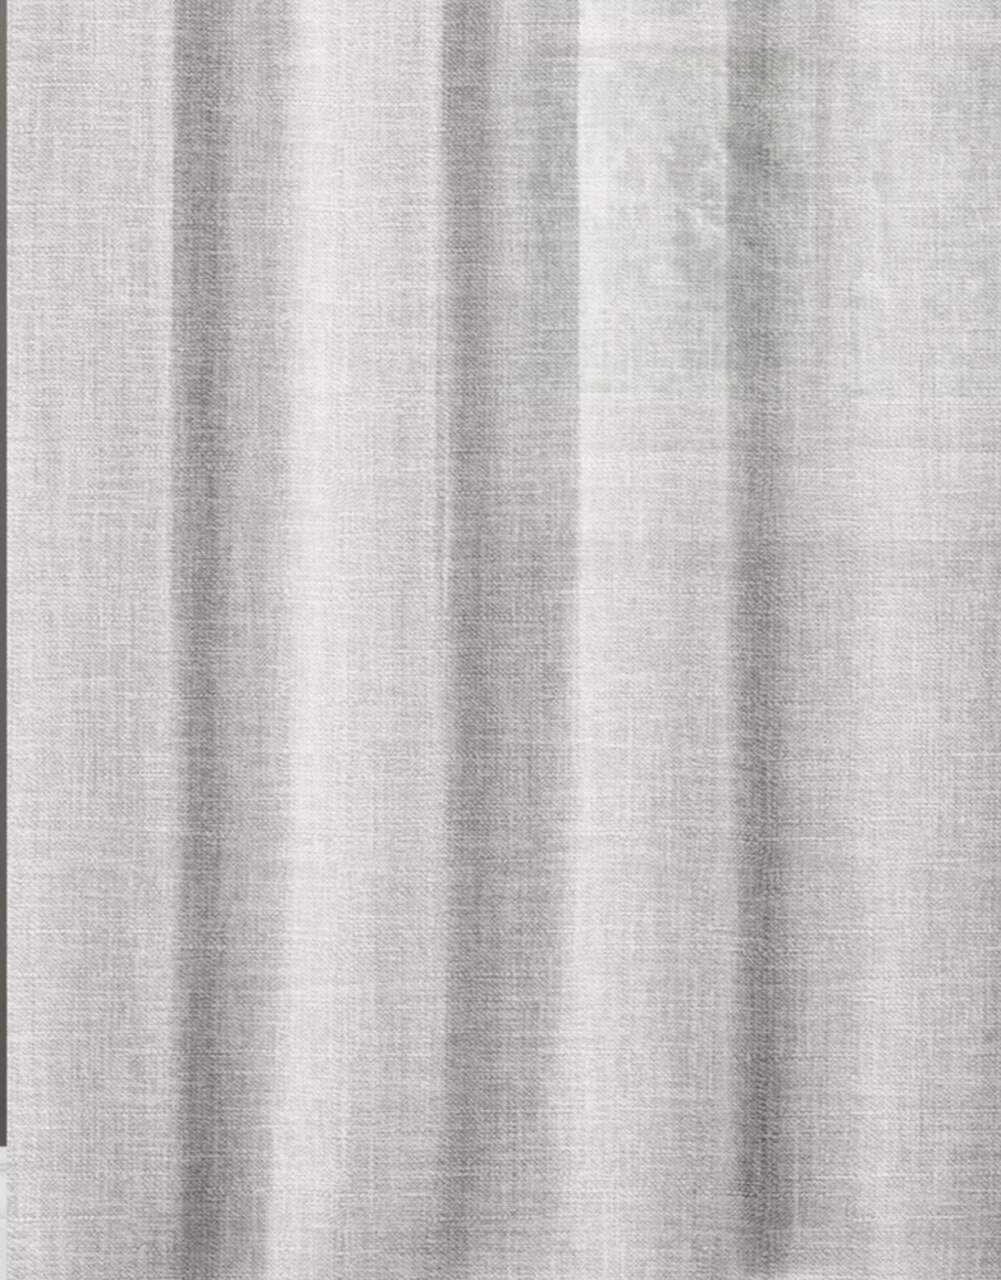 CANVAS Semi Sheer Bella Textured Linen Window Curtain, White, 54-in x  84-in, 2-pk